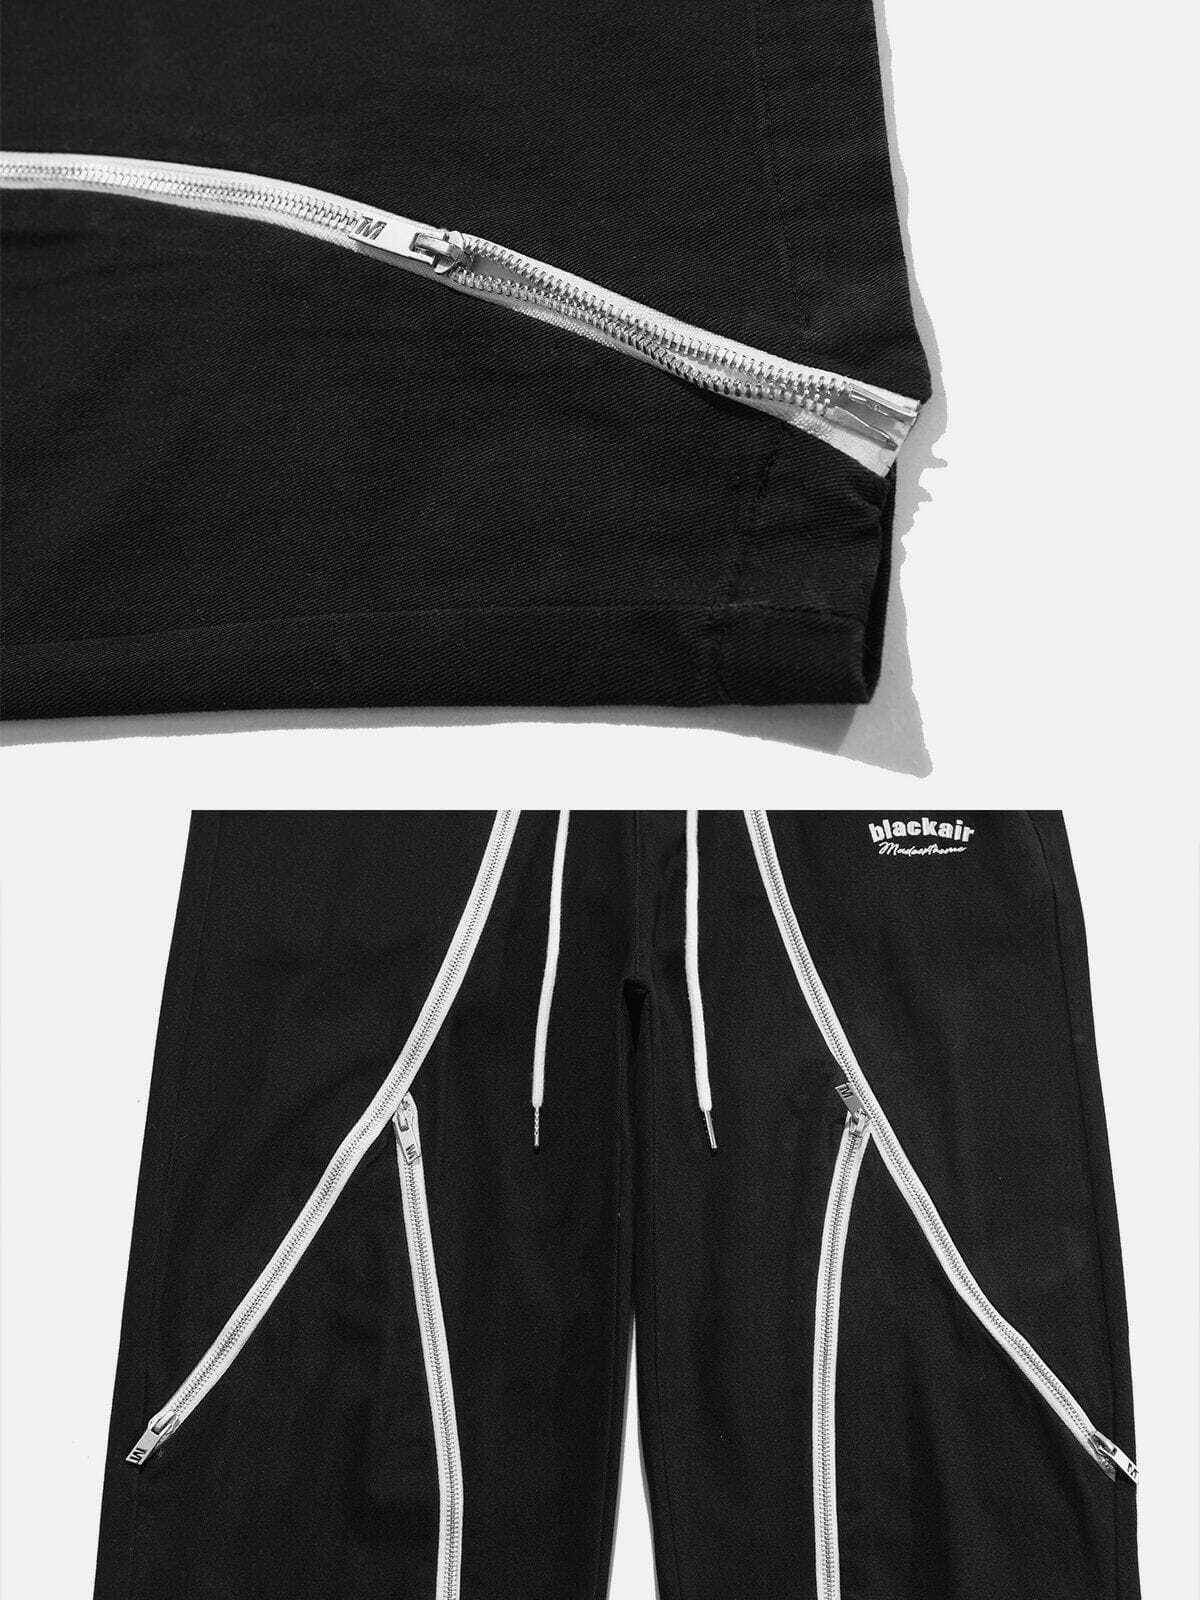 zipperembellished cargo pants edgy streetwear essential 1056